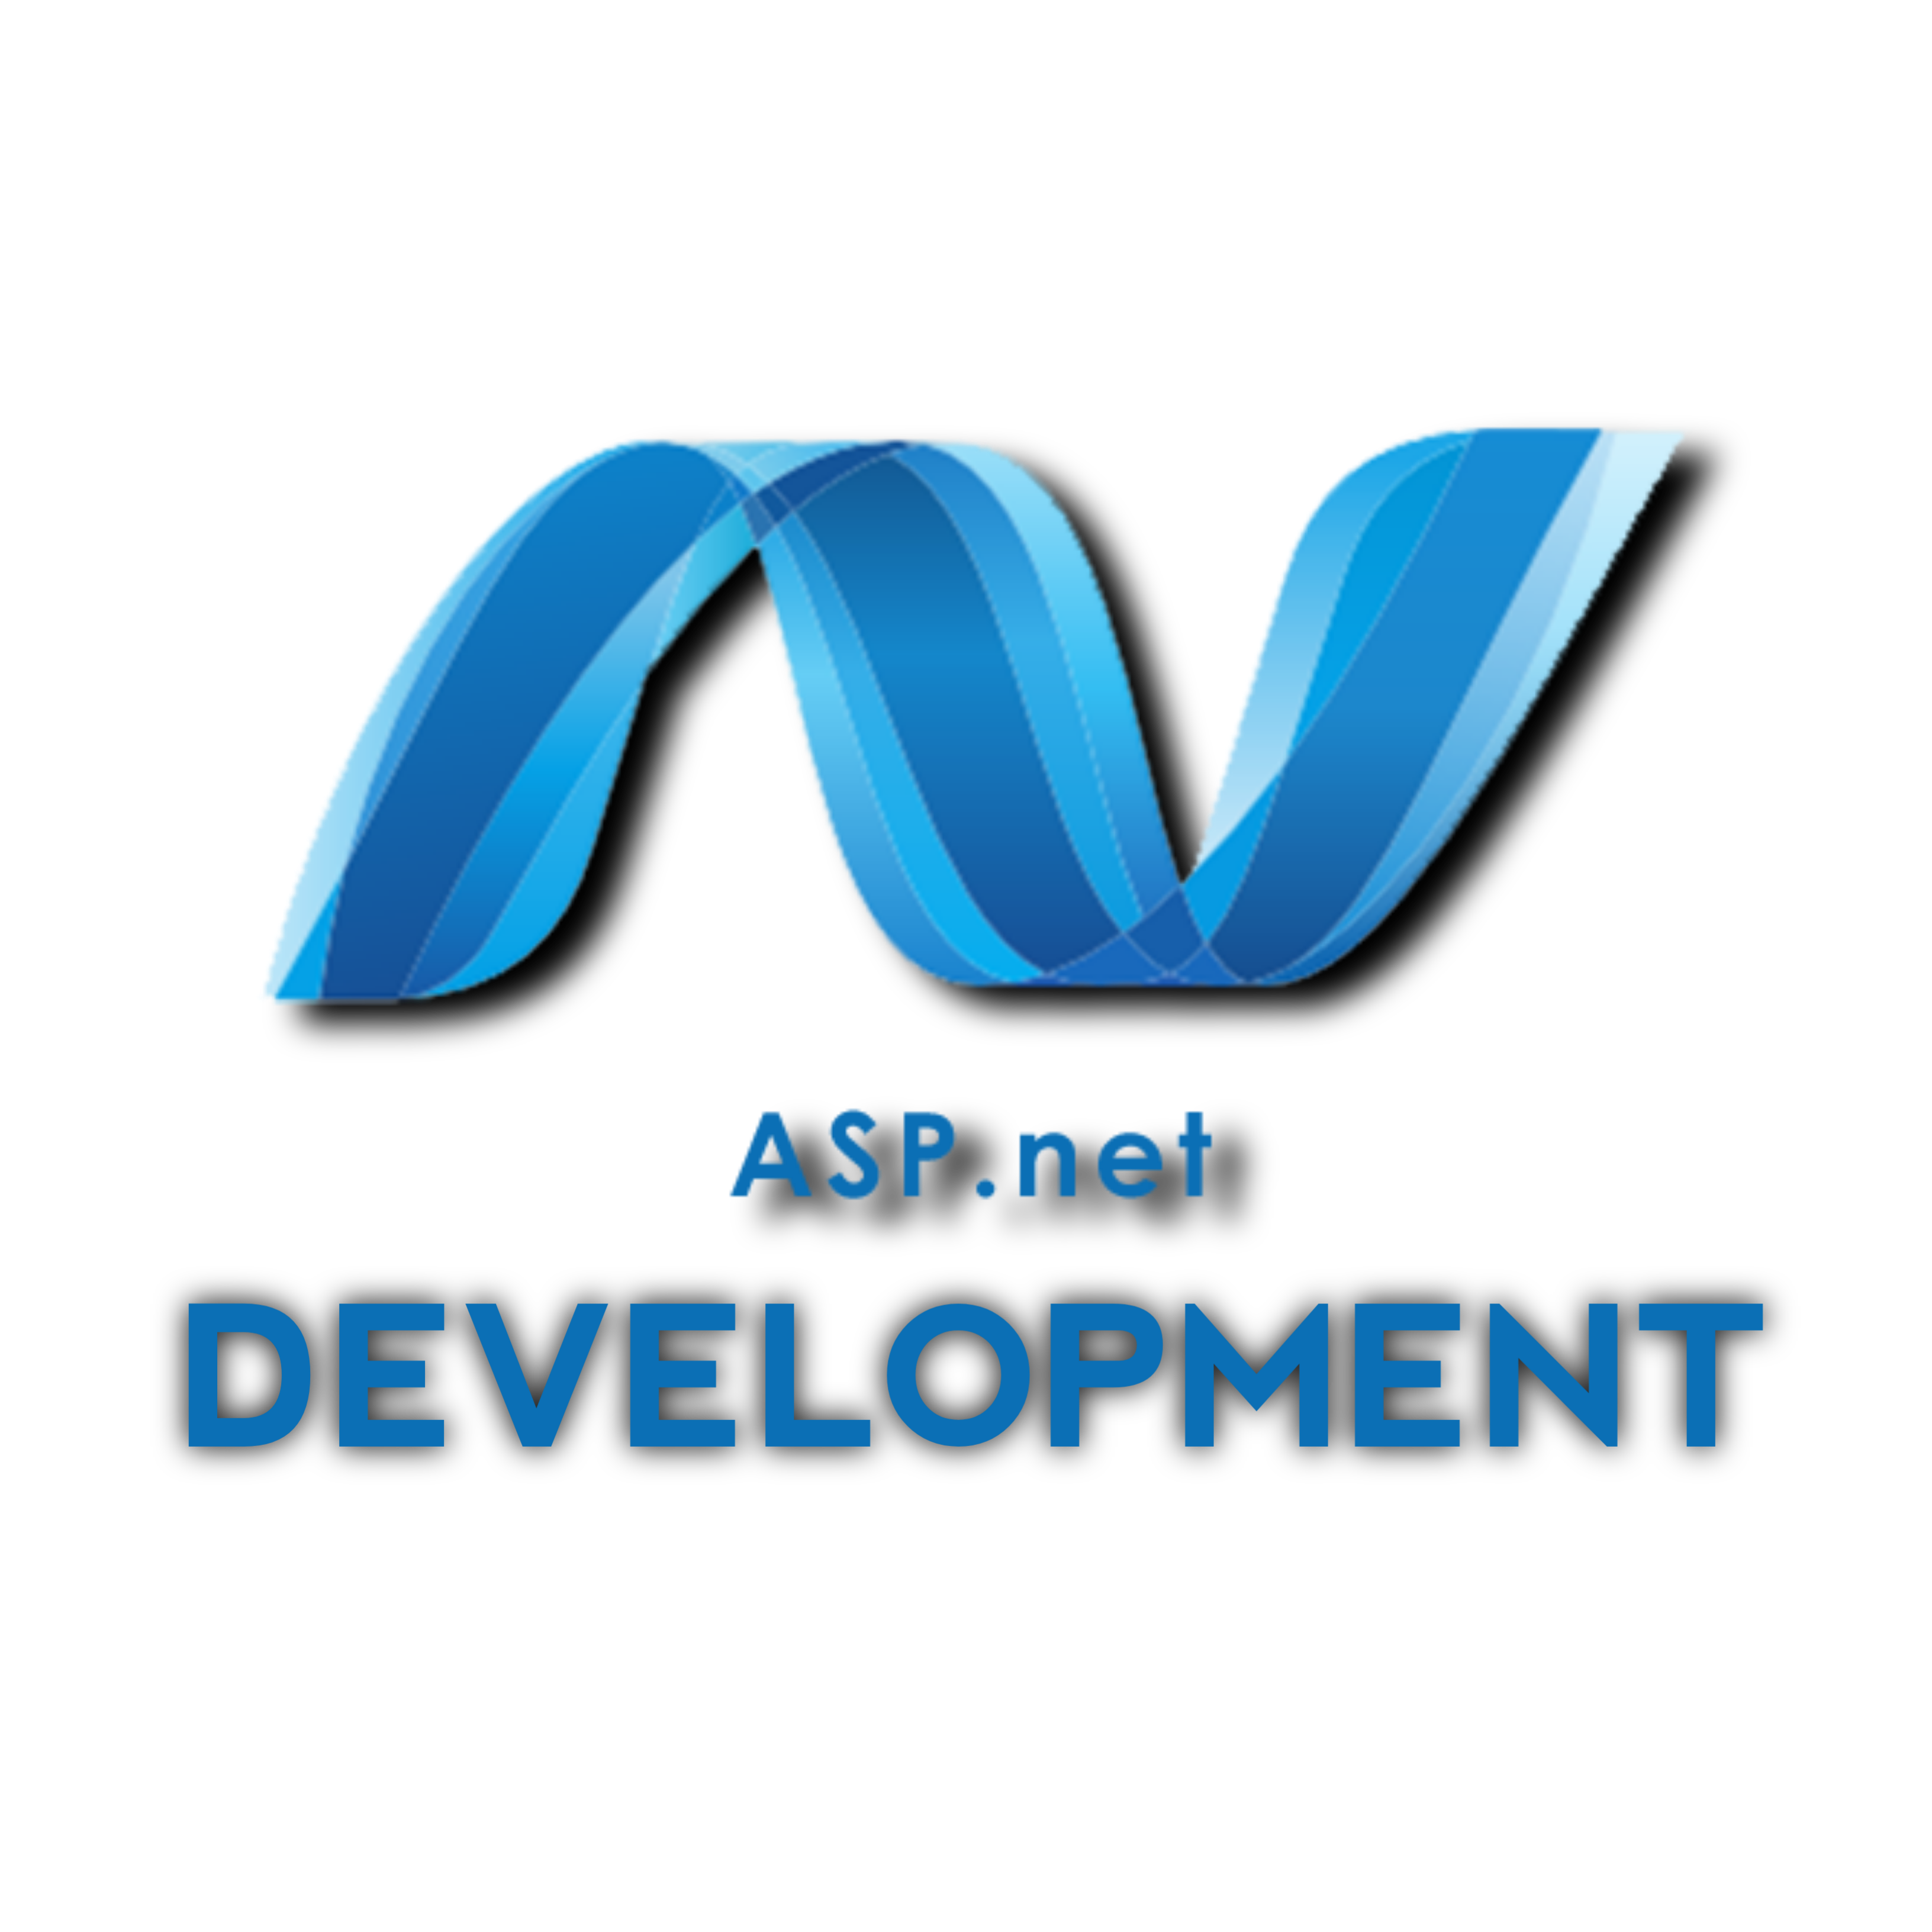 asp.net-developer-job